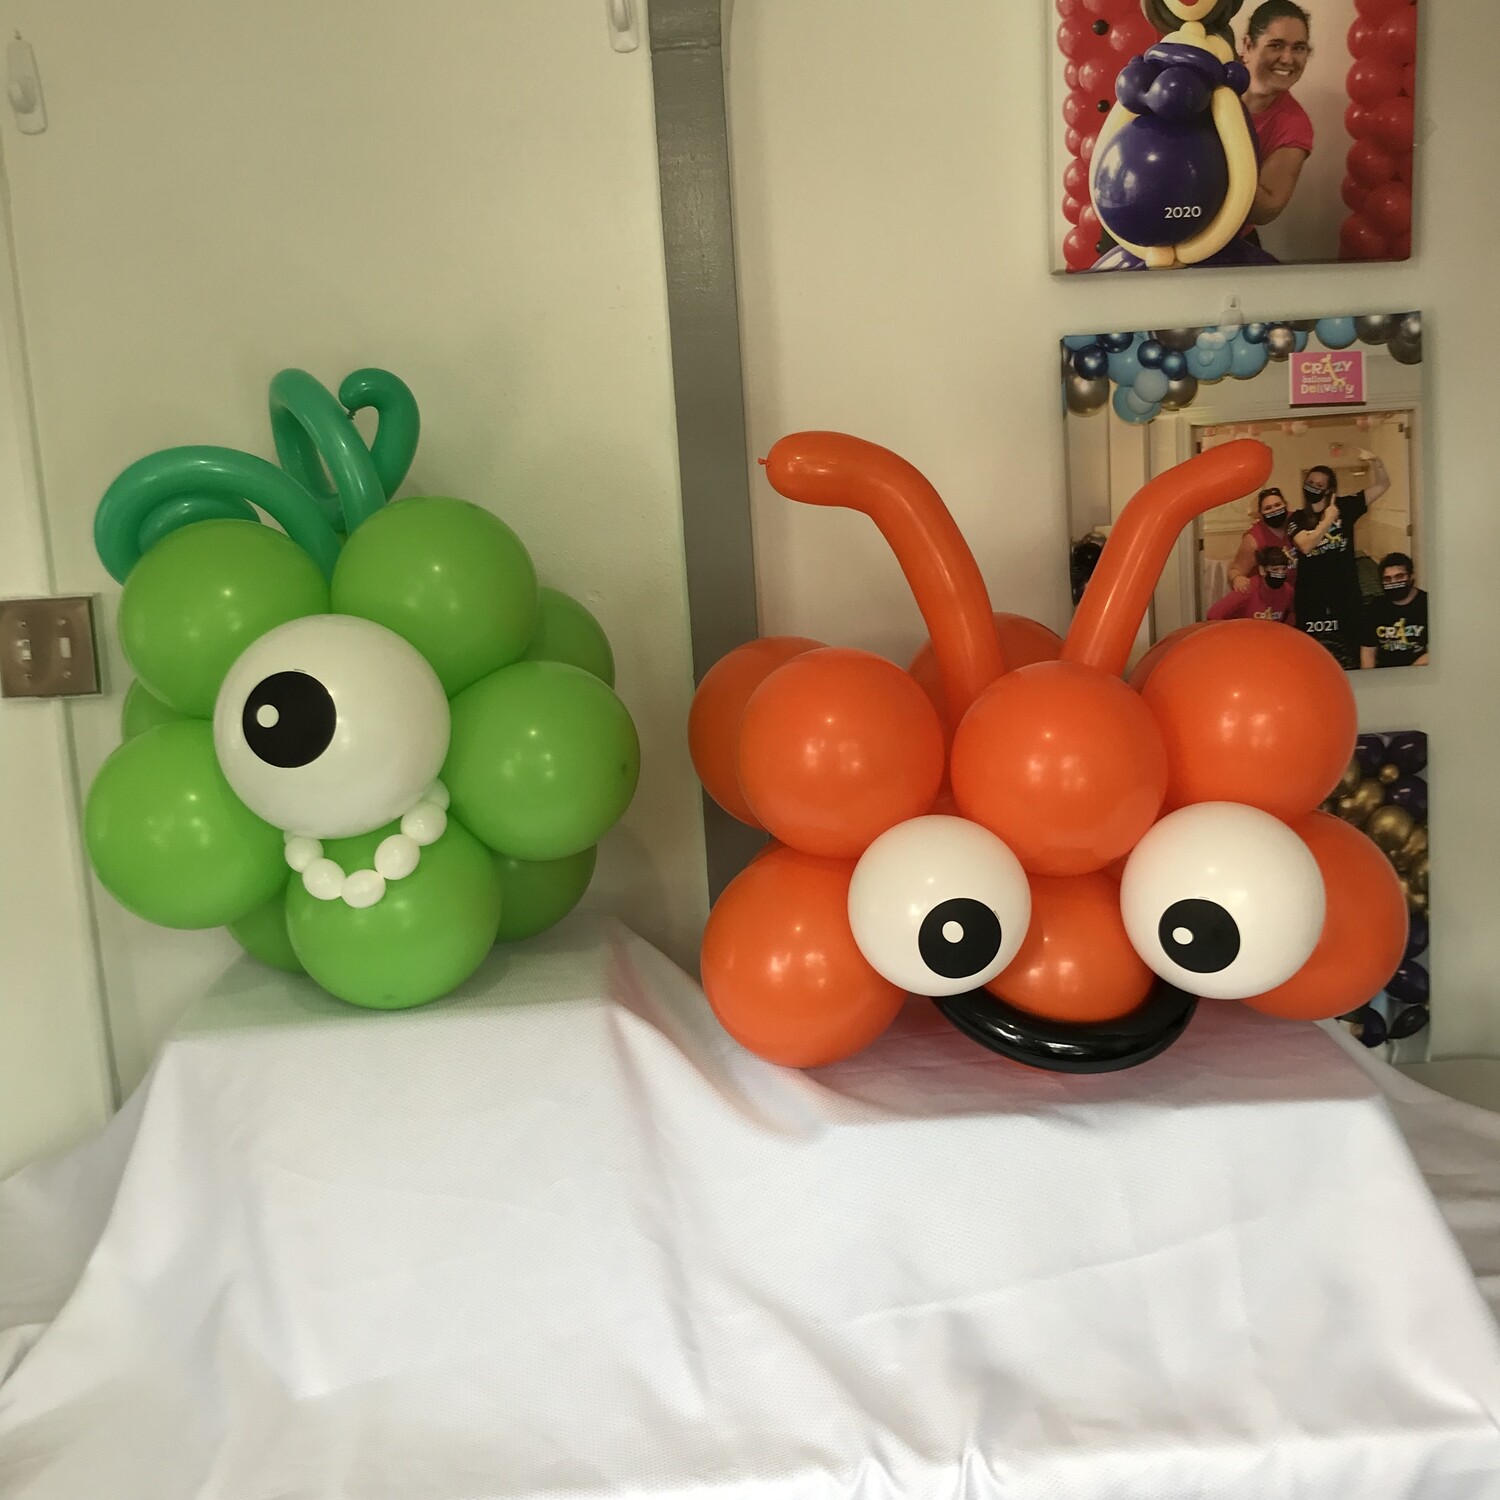 Two monster balloons